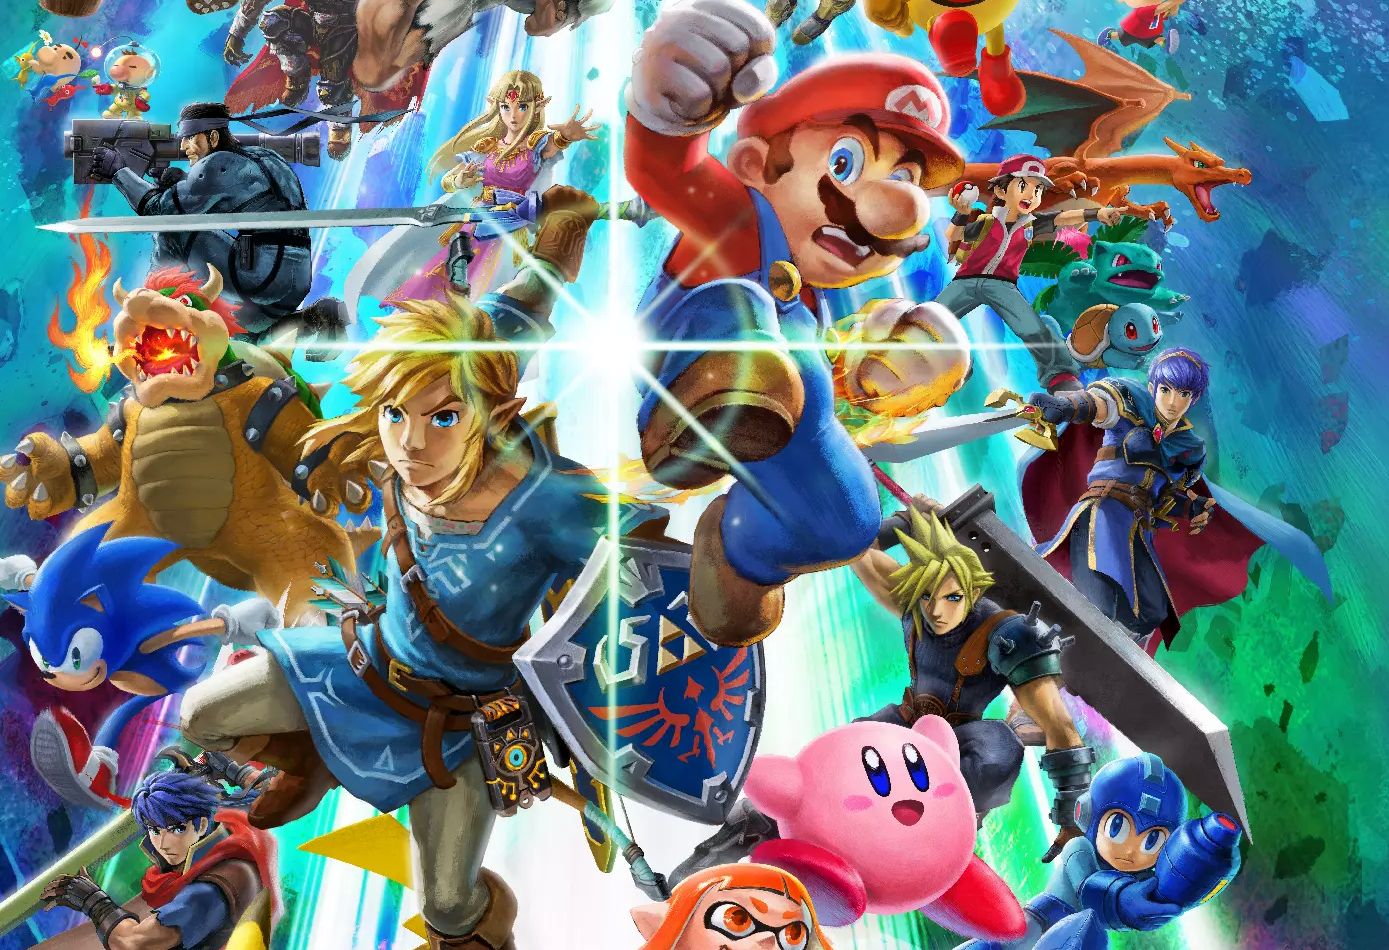 Image for Nintendo blocks Smash Bros. tournament over mod use